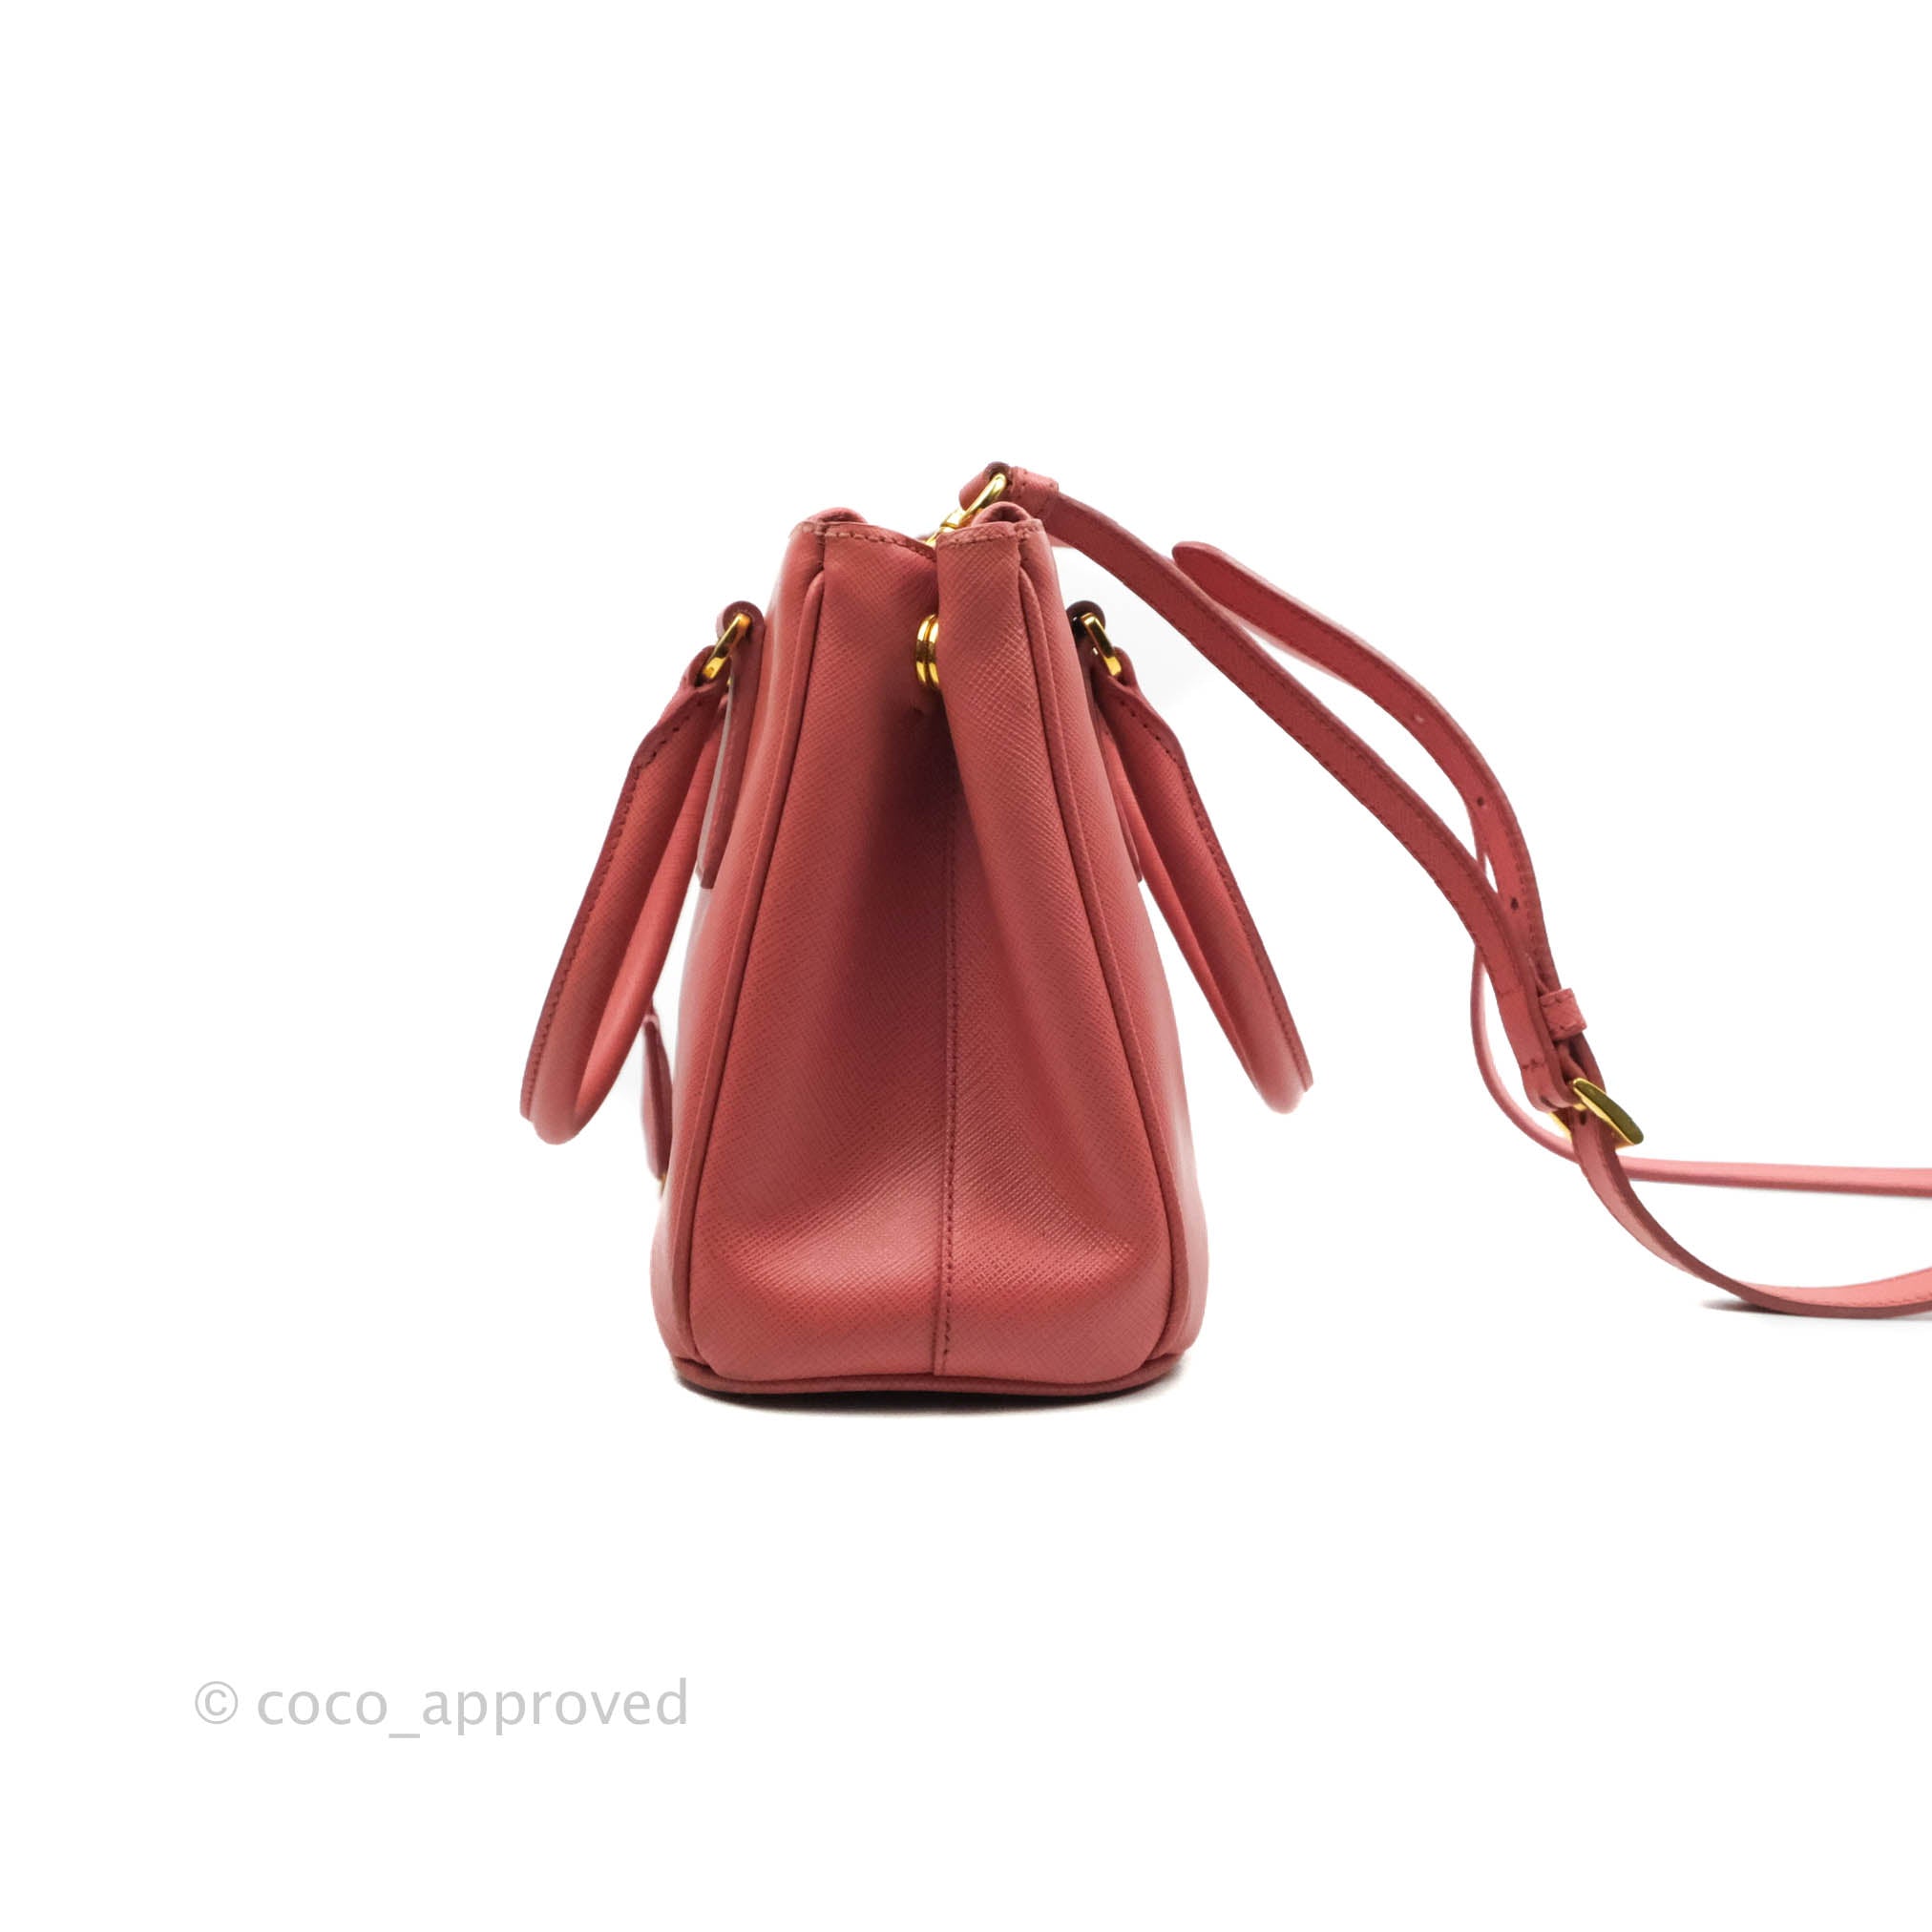 Sold at Auction: Prada - Saffiano Mini Pink Leather Crossbody Shoulder Bag  - Zip Lux Galleria